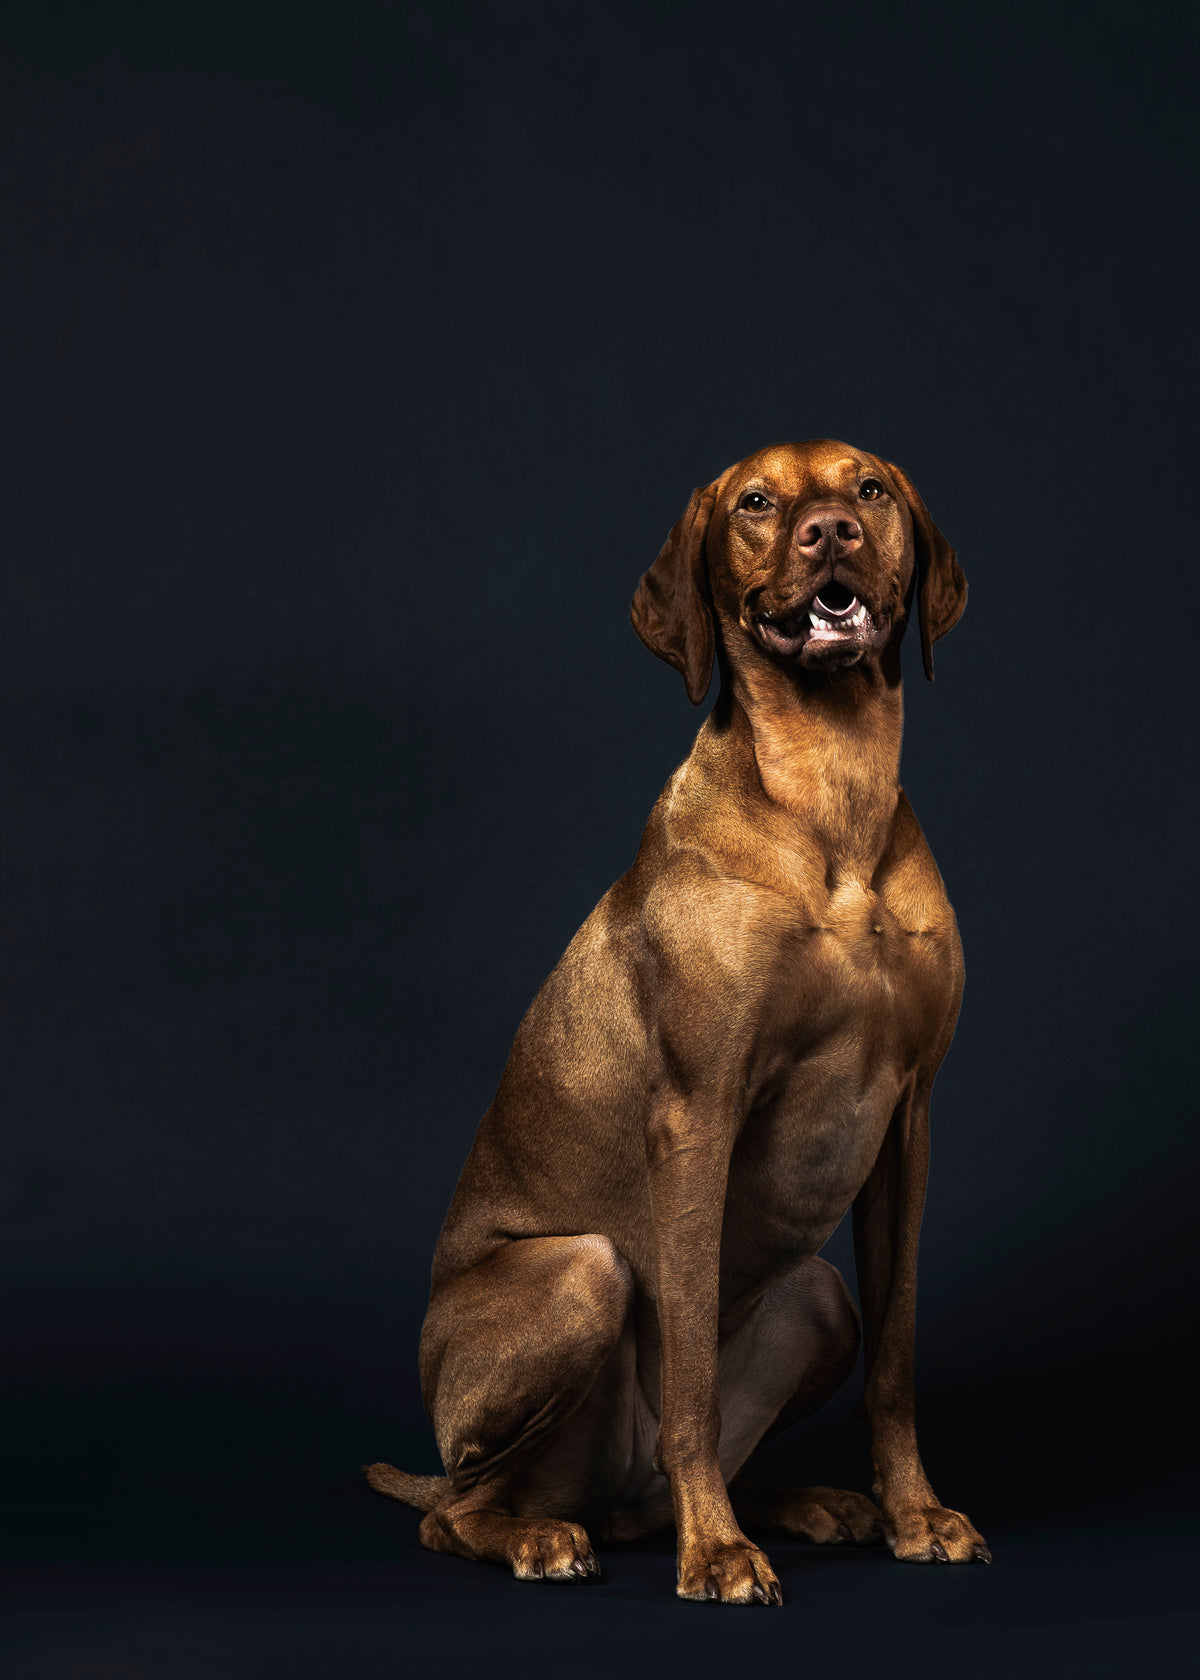 a grinning bronze-coloured dog